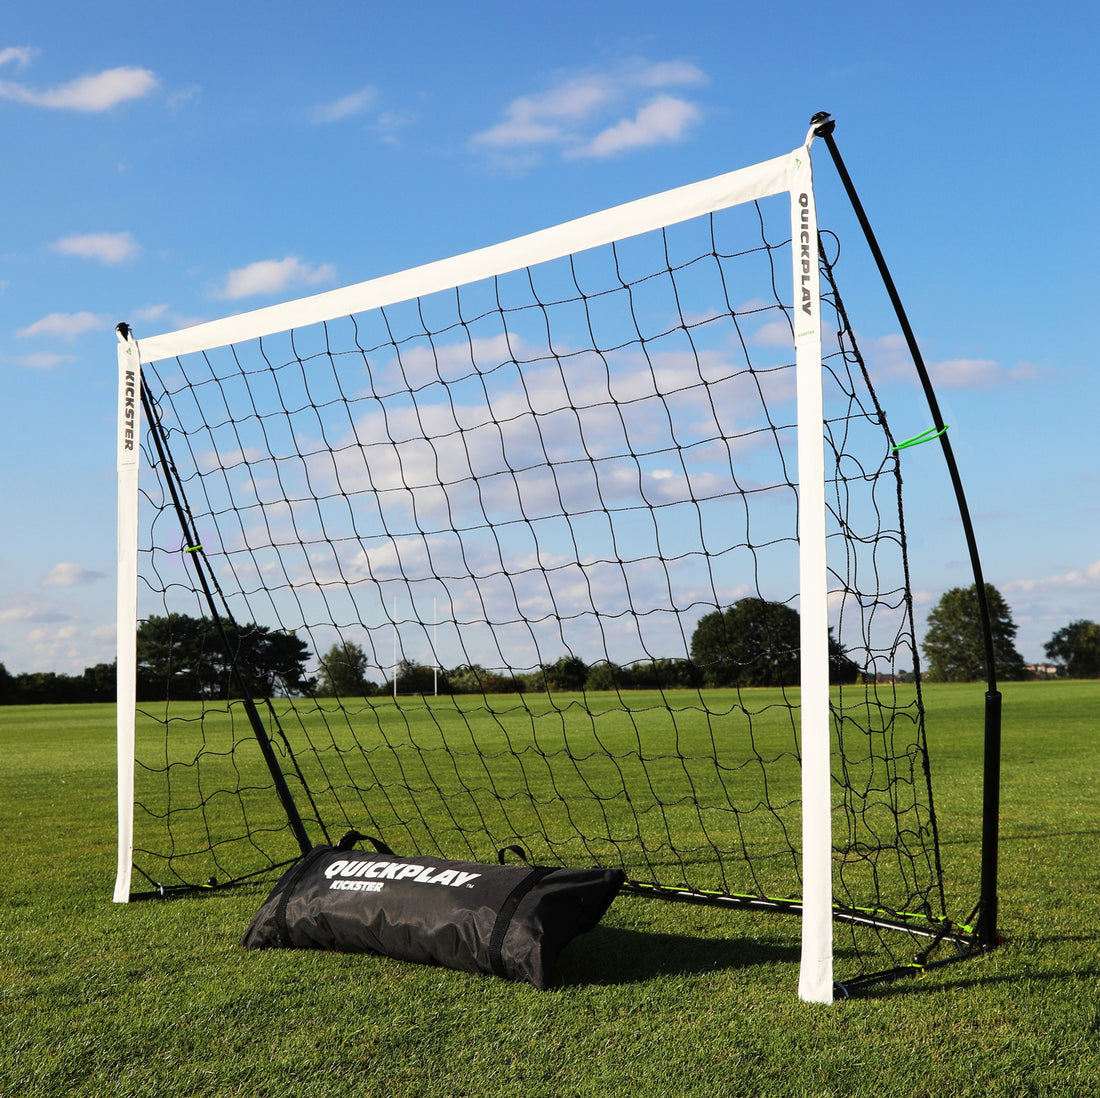 KICKSTER 1.5x1m (5x3') Portable Mini Football Goal